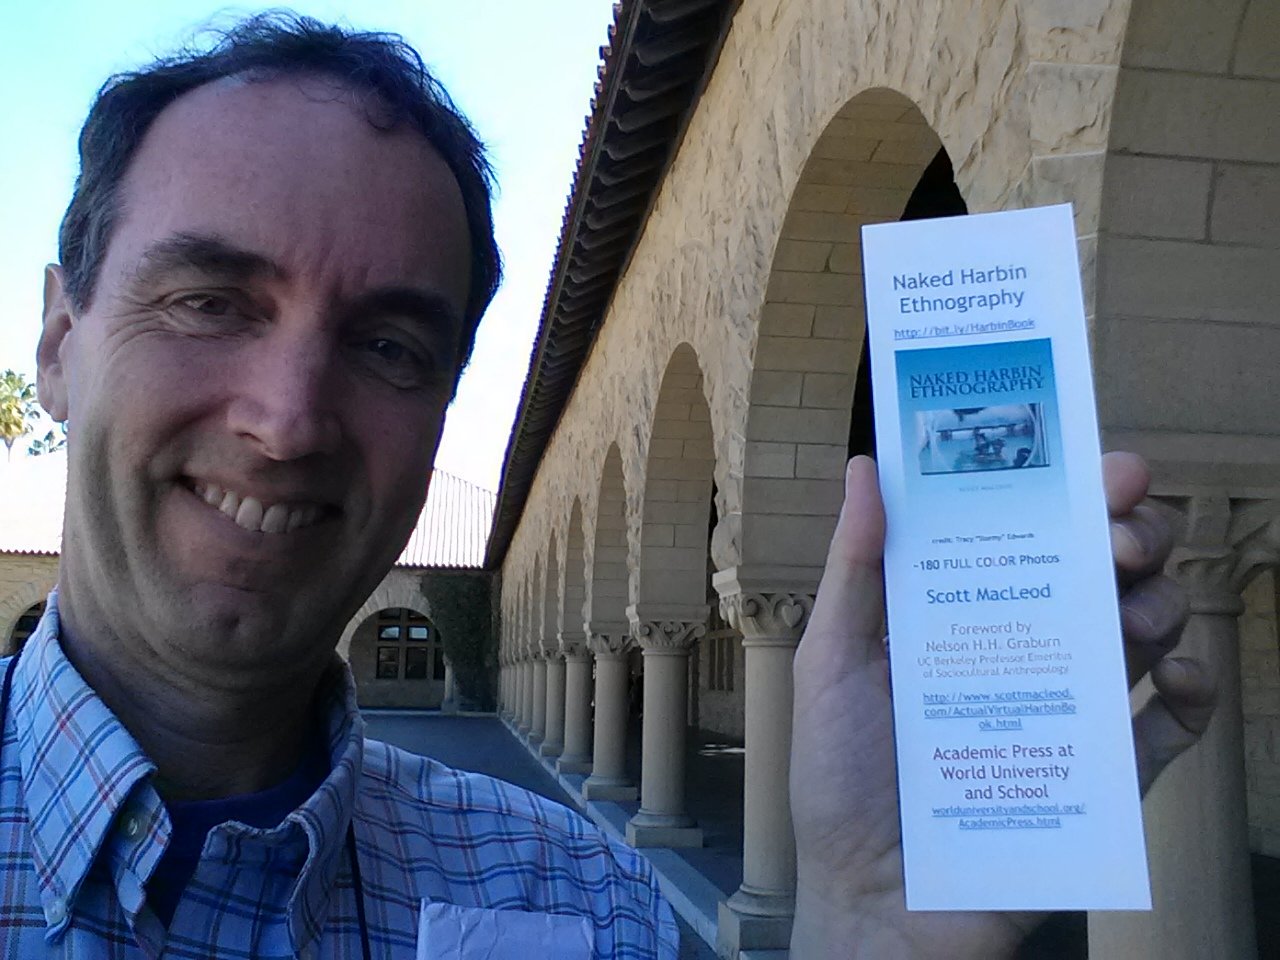 Scott MacLeod Harbin Ethnography Bookmark Stanford Arches